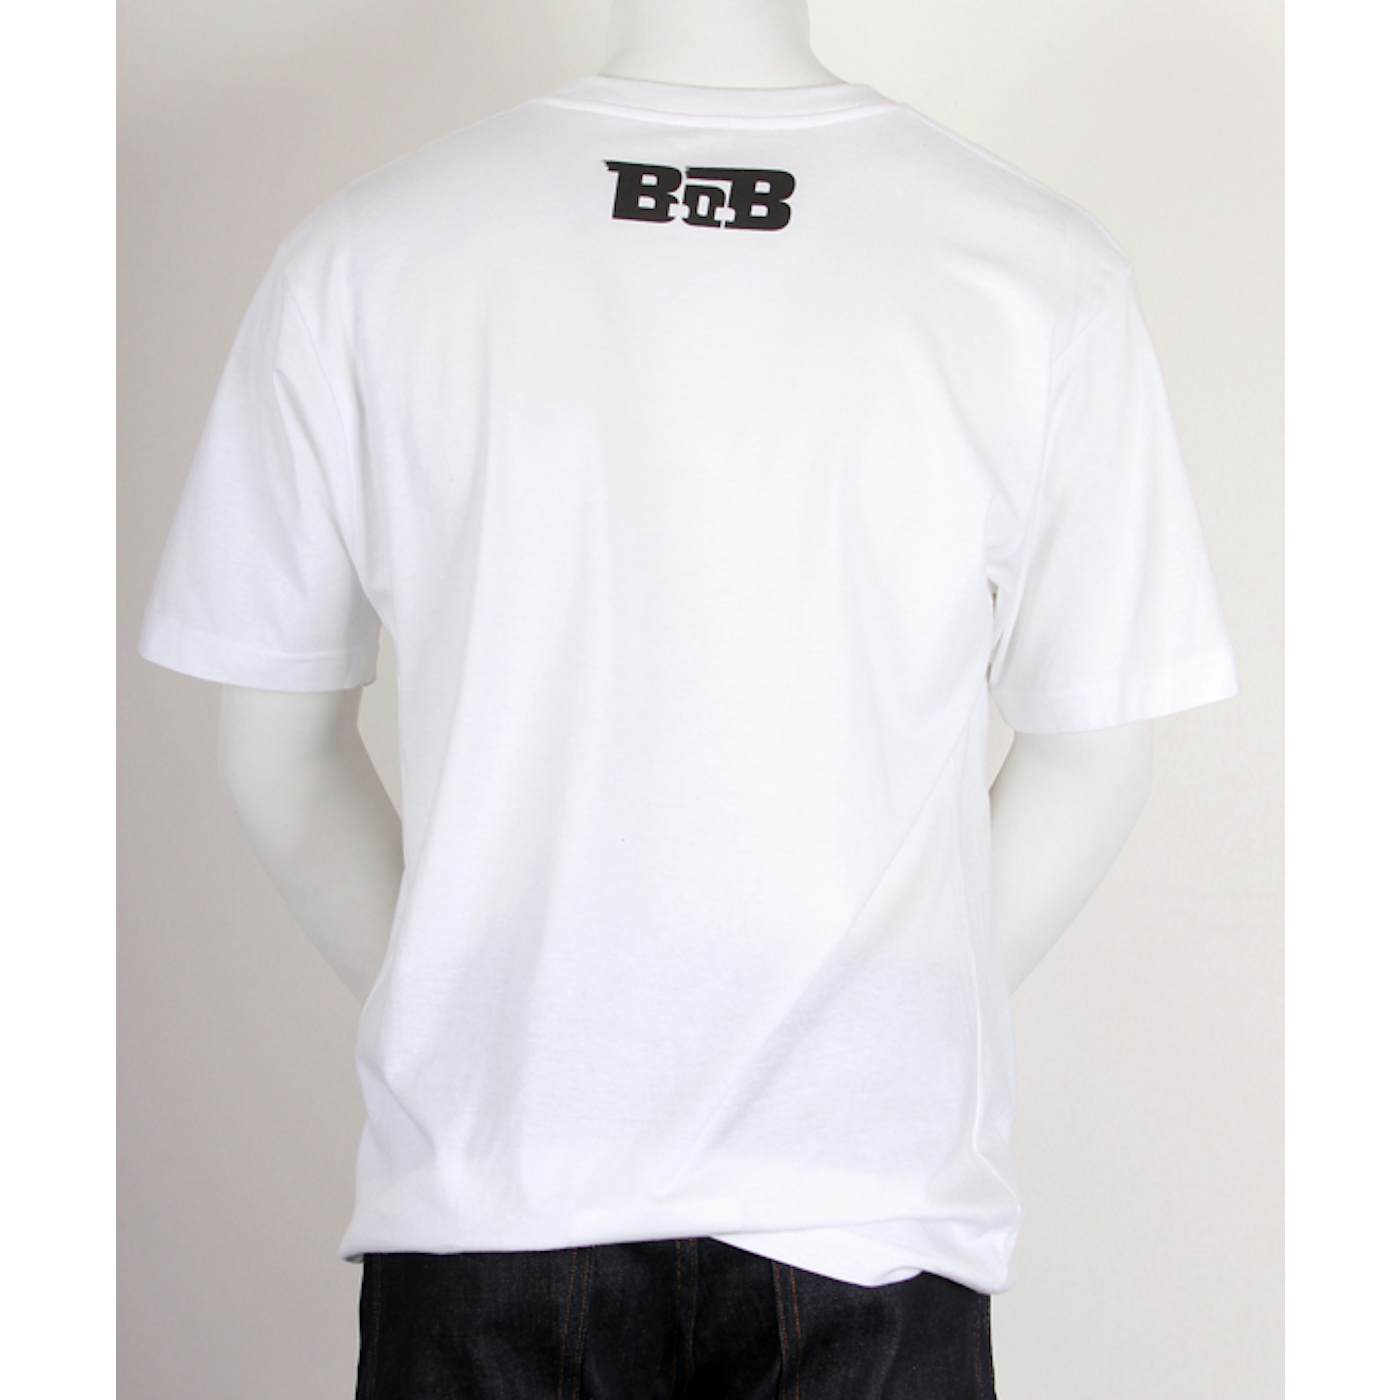 B.o.B Haterz Shock Basic White T-shirt